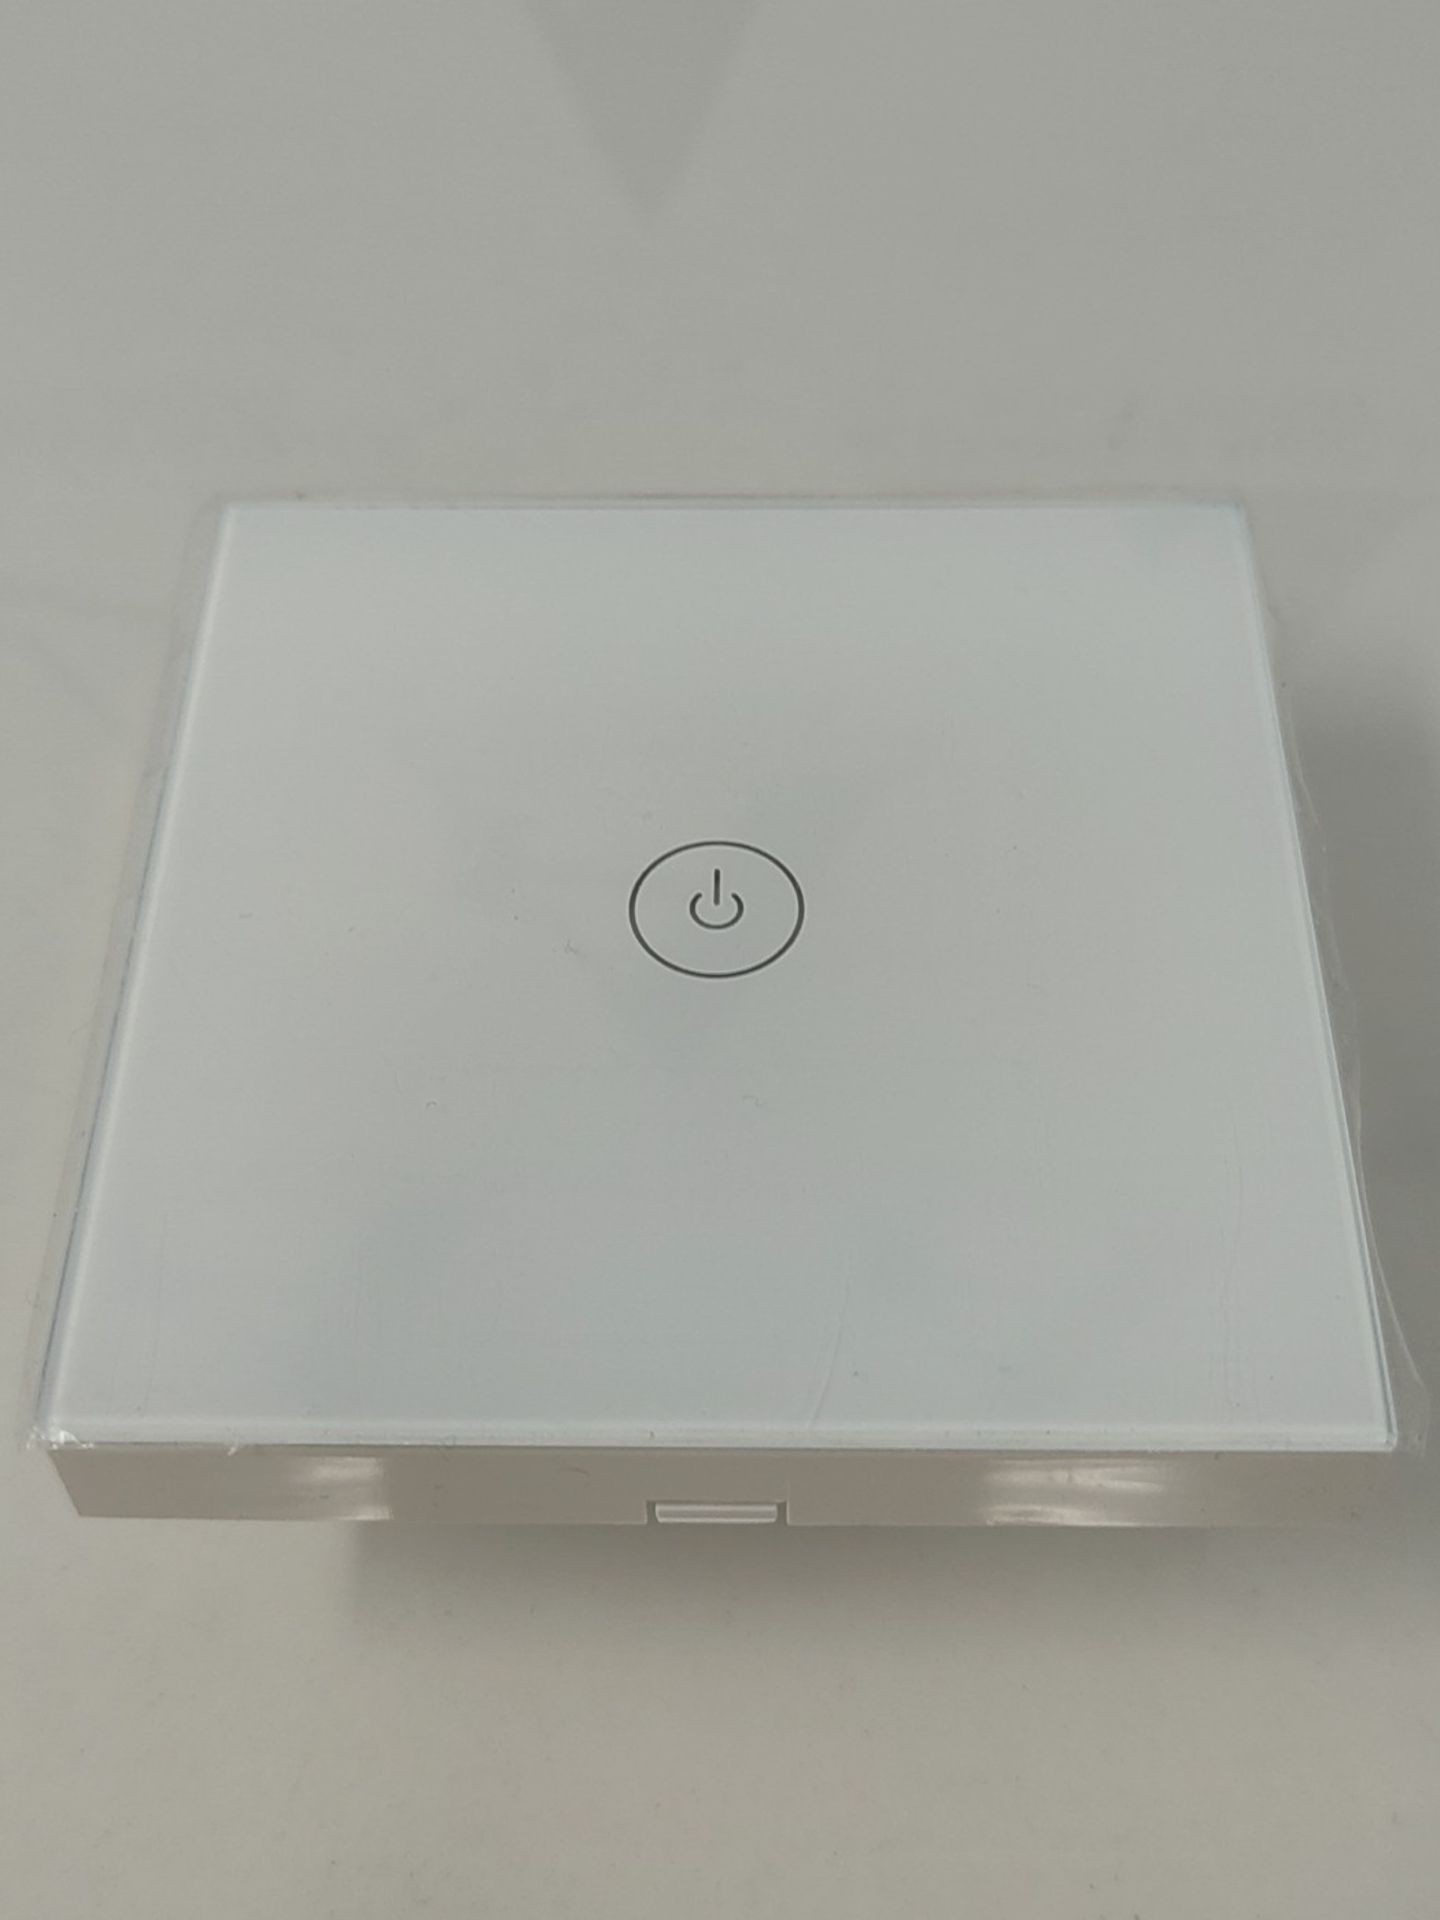 TCP Smart Wi-Fi Single Gang Wall Switch, white,packaging may vary - Bild 3 aus 3